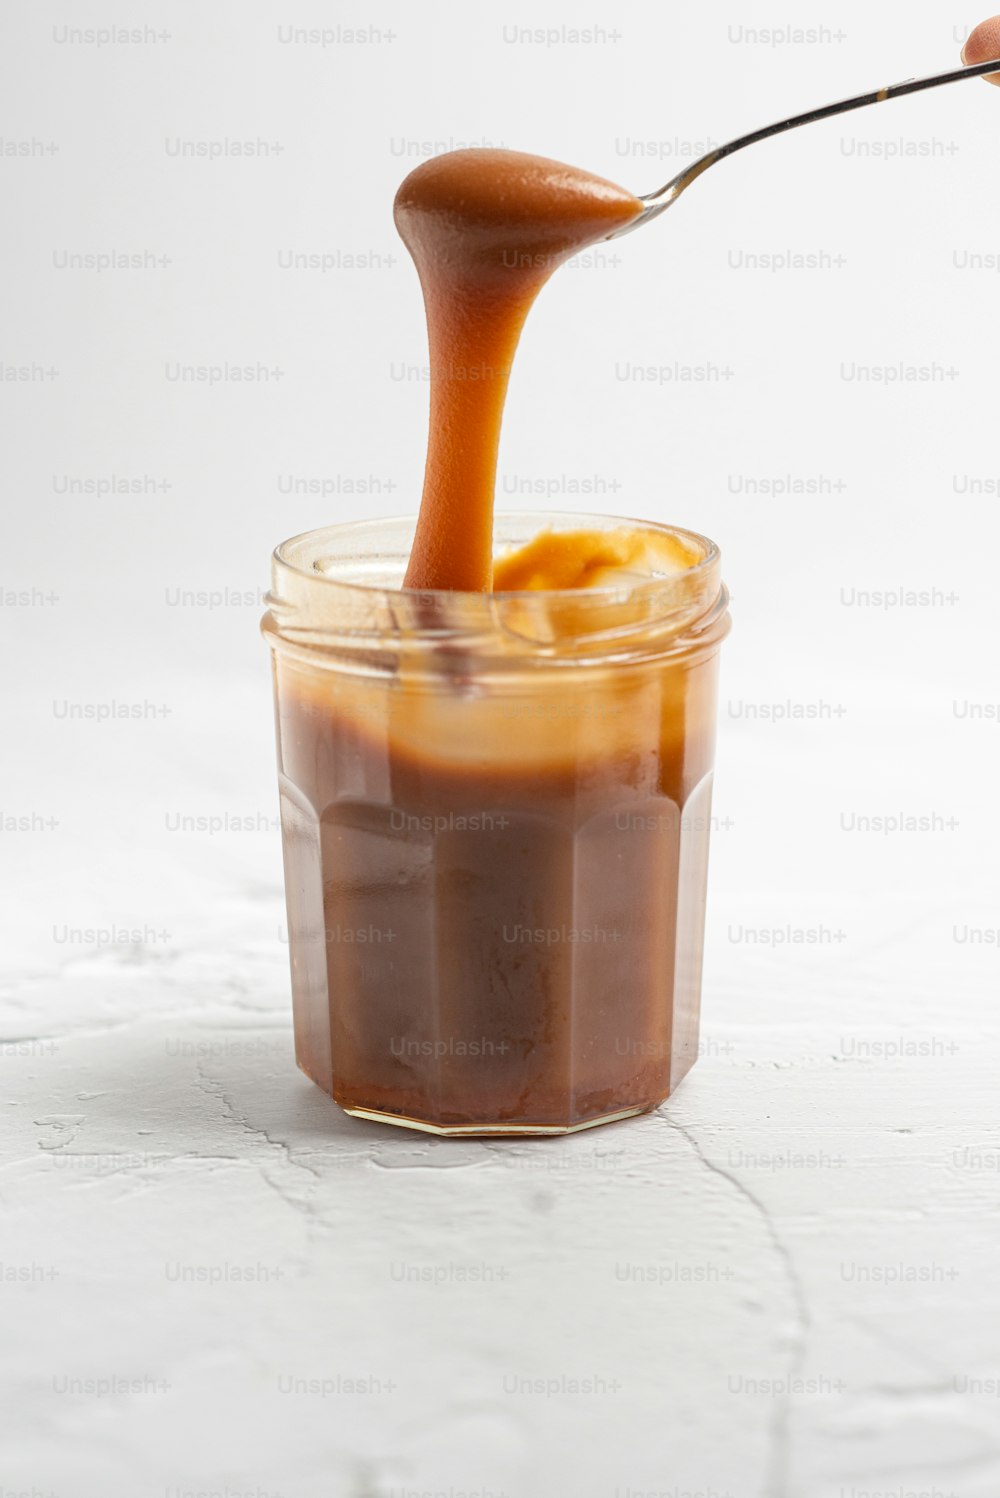 a spoon full of caramel sauce in a jar